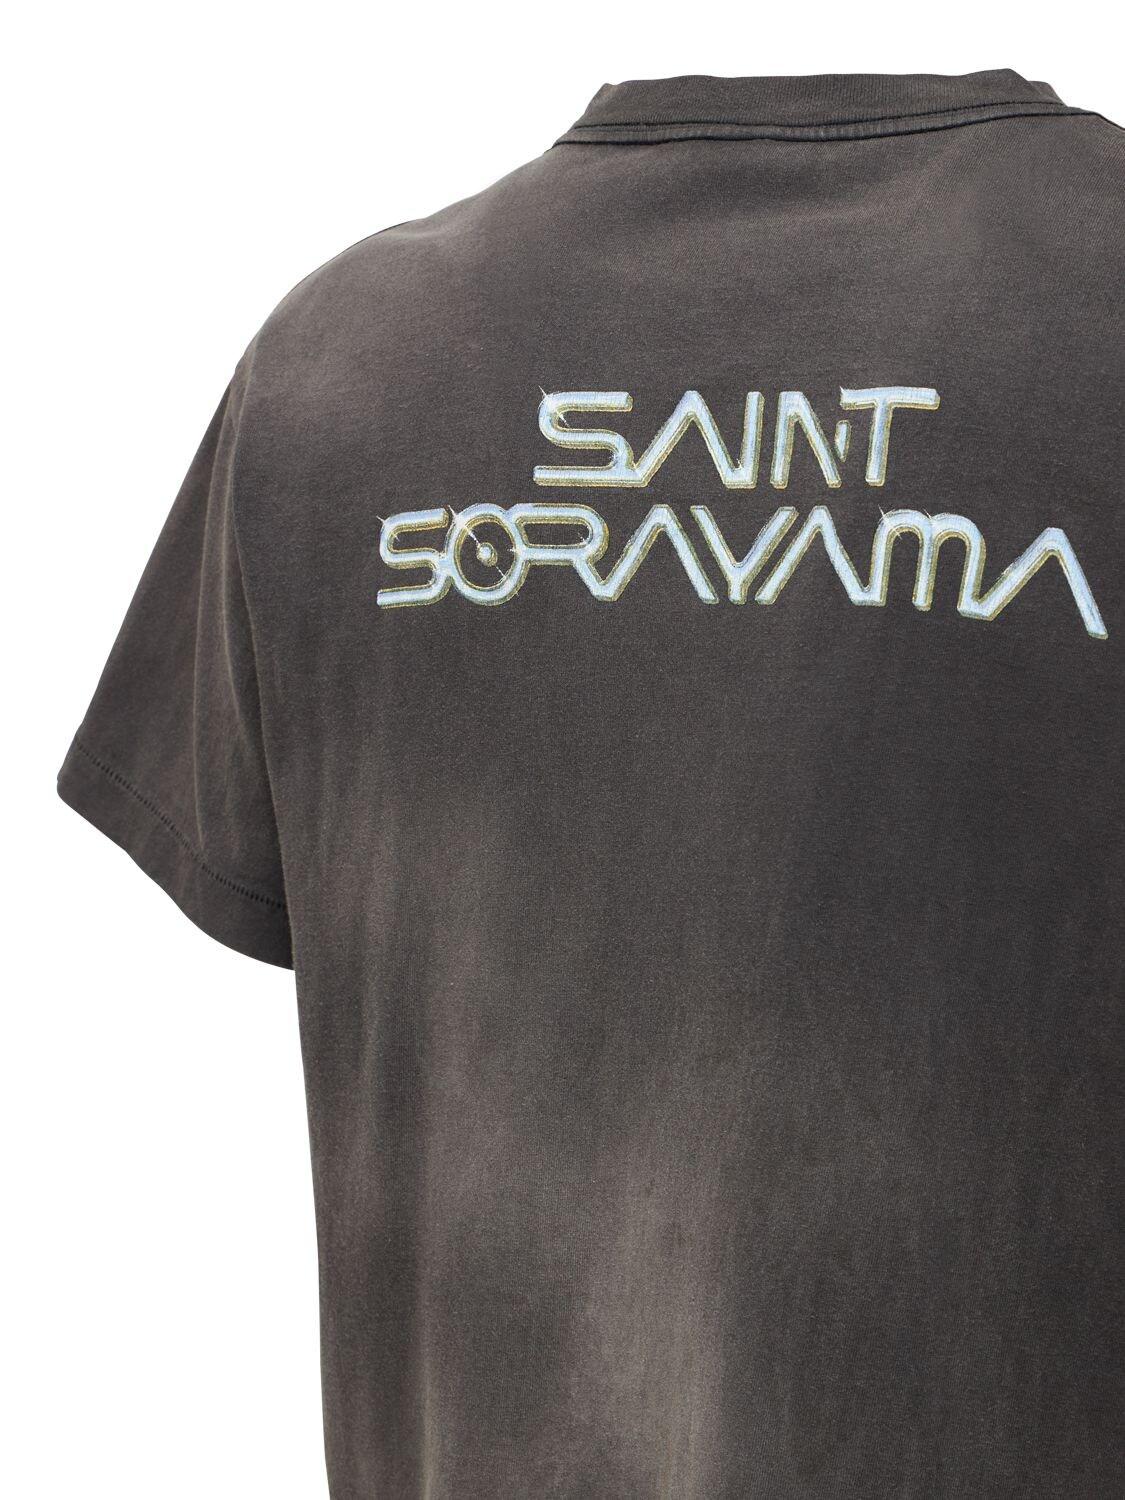 Saint Michael Sorayama X T-shirt in Black for Men | Lyst